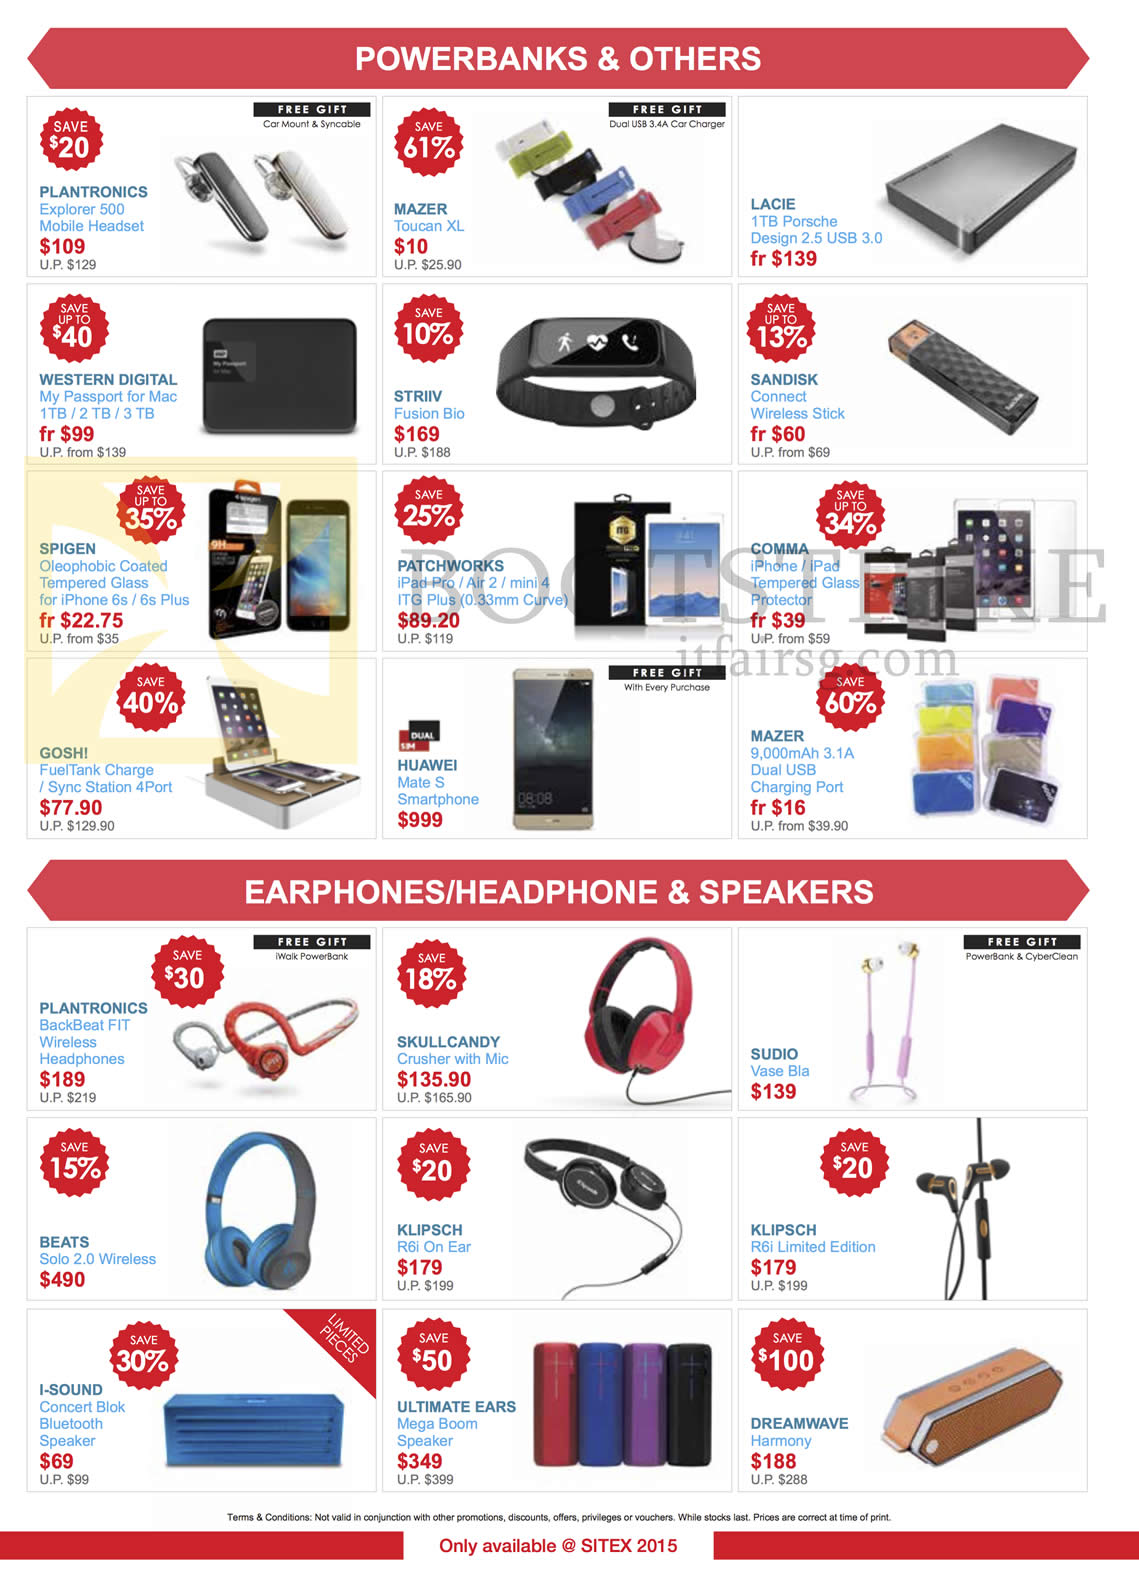 SITEX 2015 price list image brochure of EpiCentre PowerBanks, Earphones, Headphones, Speakers, Plantronics, Mazer, Lacie, Sandisk, Striiv, Western Digital, Goshi, Guawei, Skullcandy